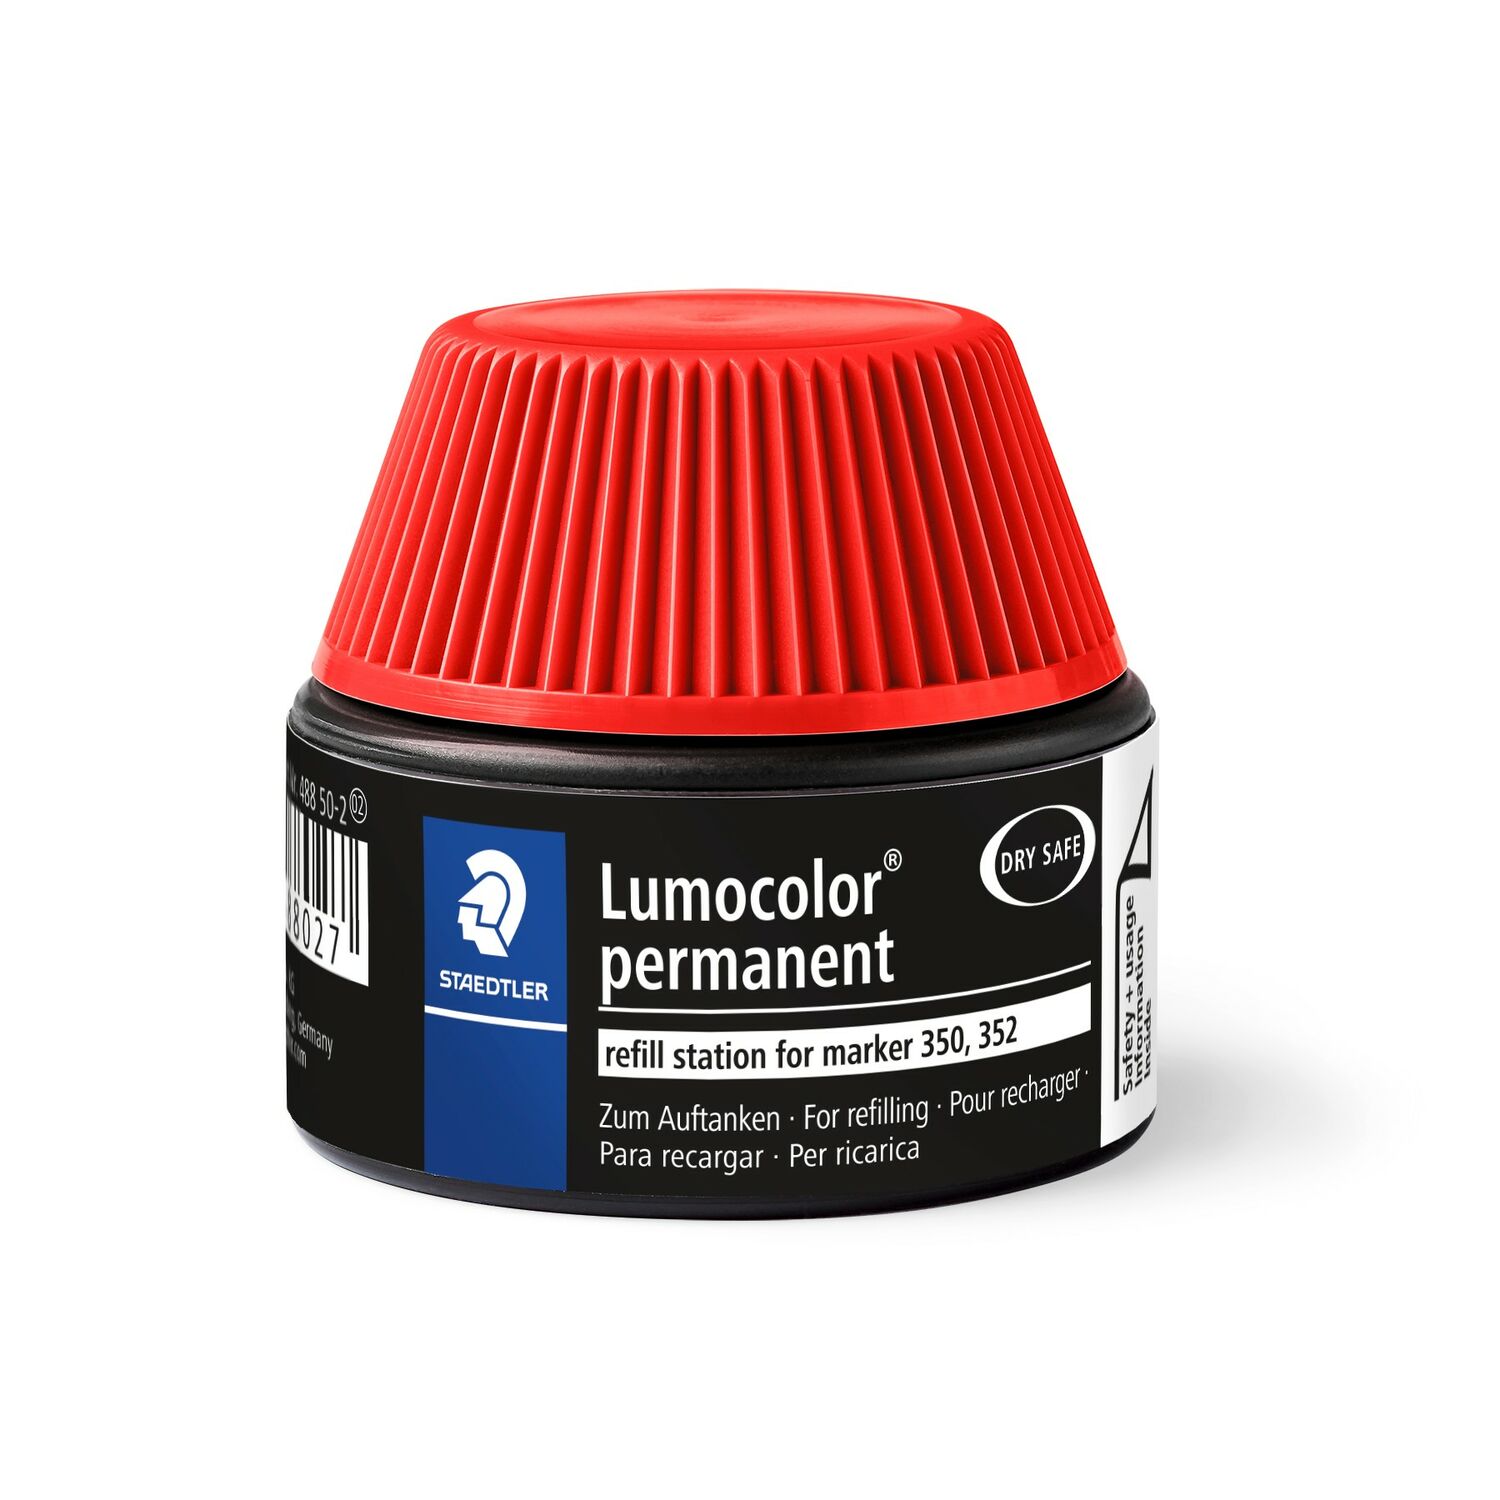 Lumocolor® permanent marker refill station 488 50 - Refill station for Lumocolor permanent markers 350 and 352